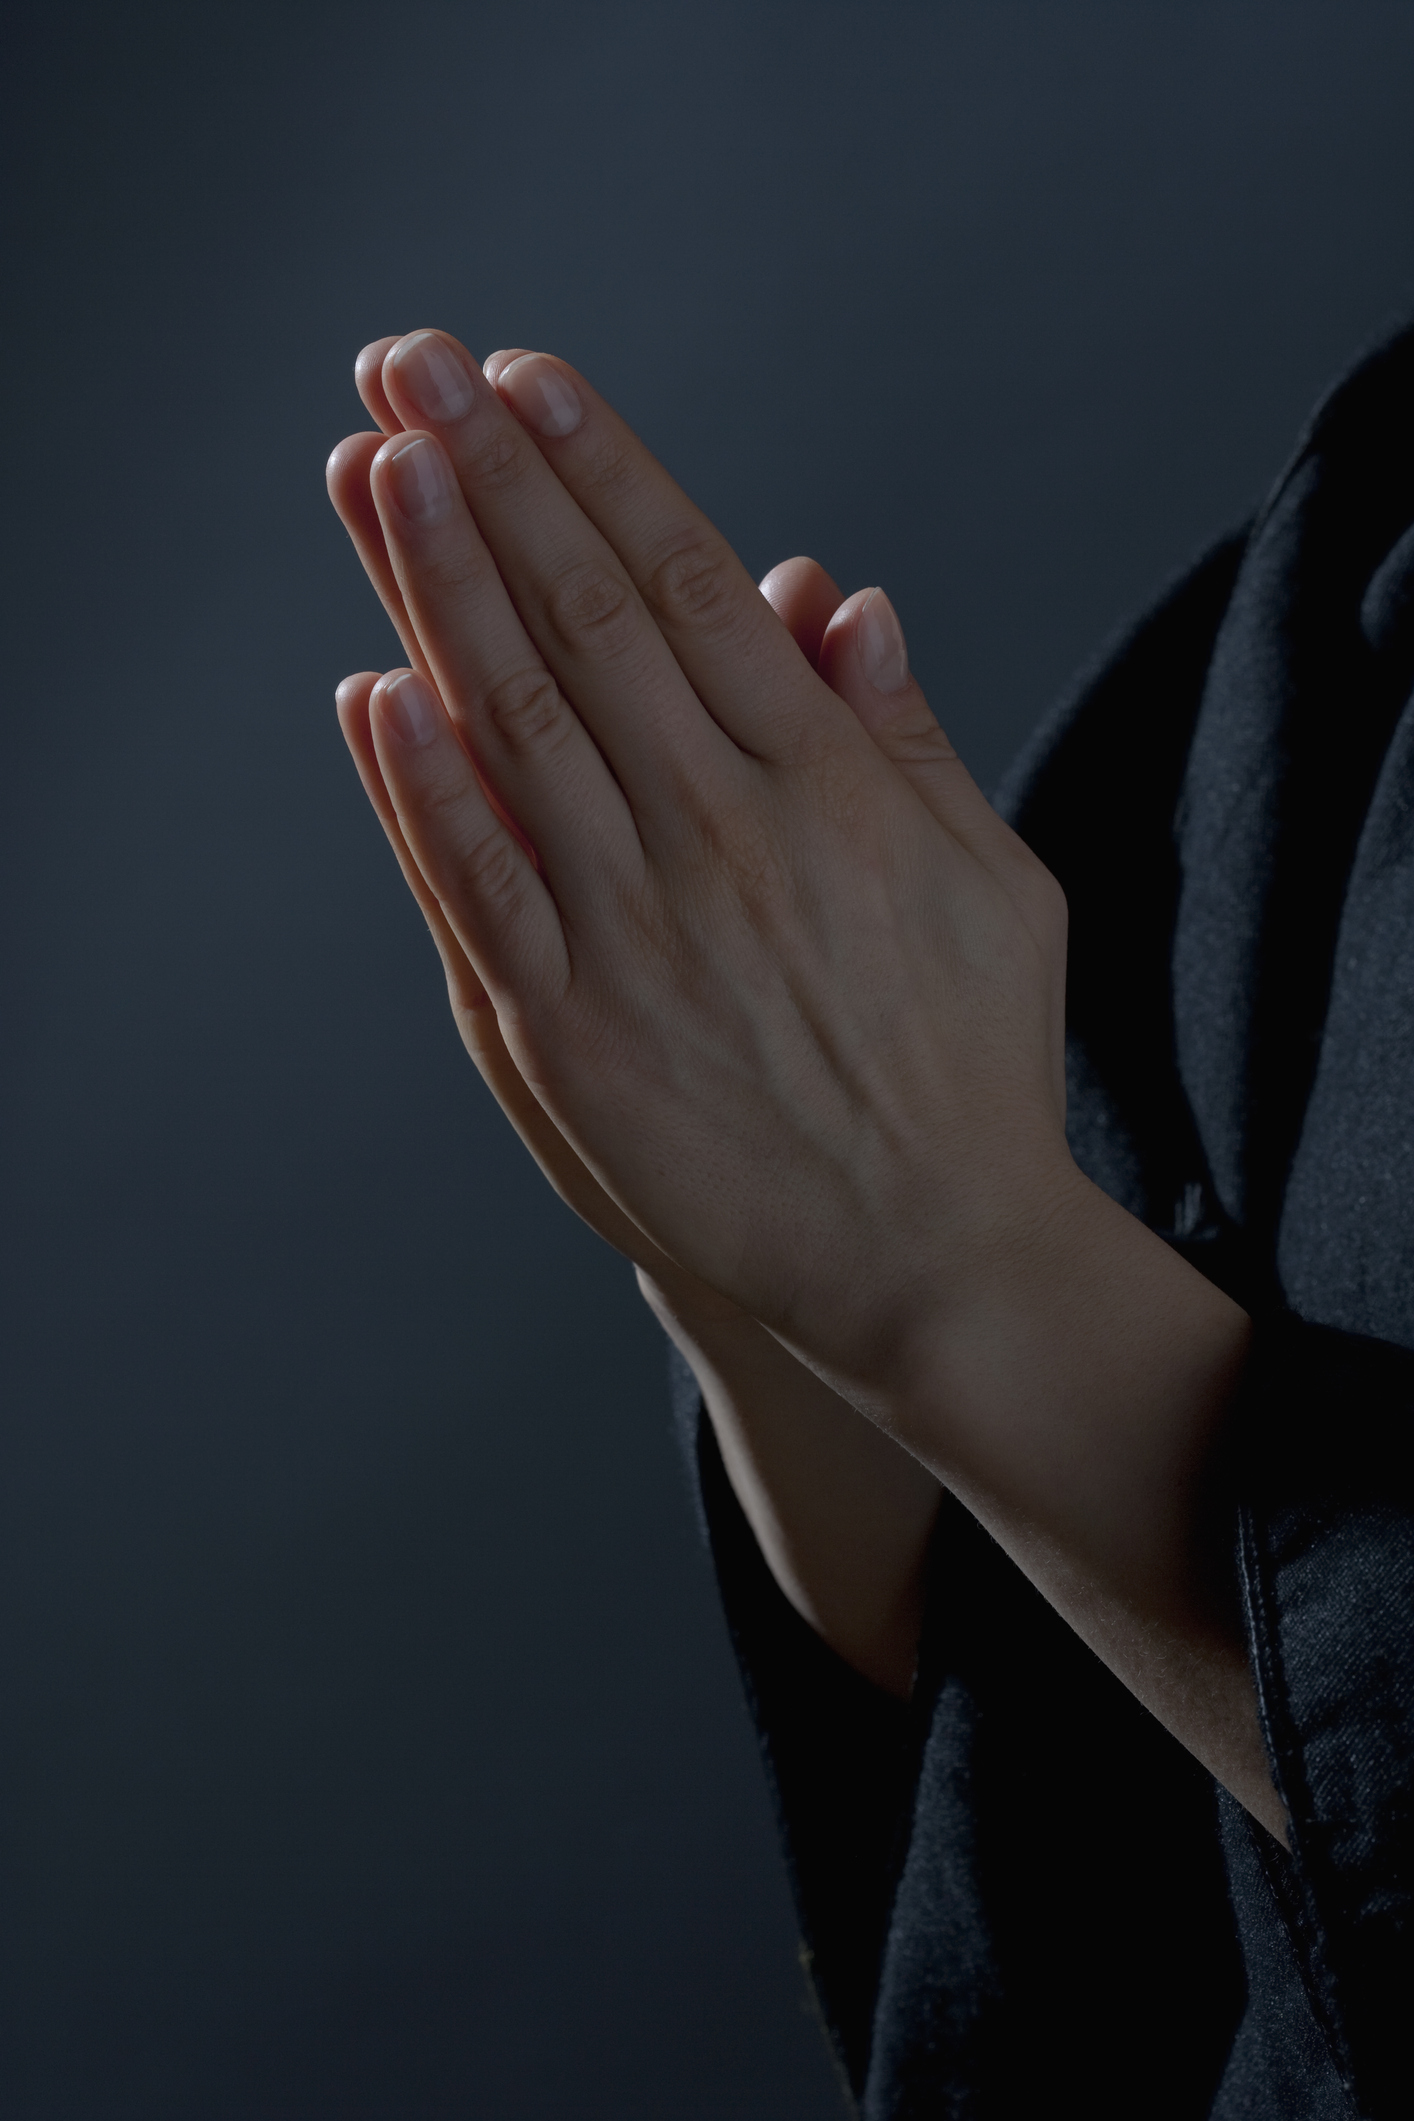 Detail of a woman praying